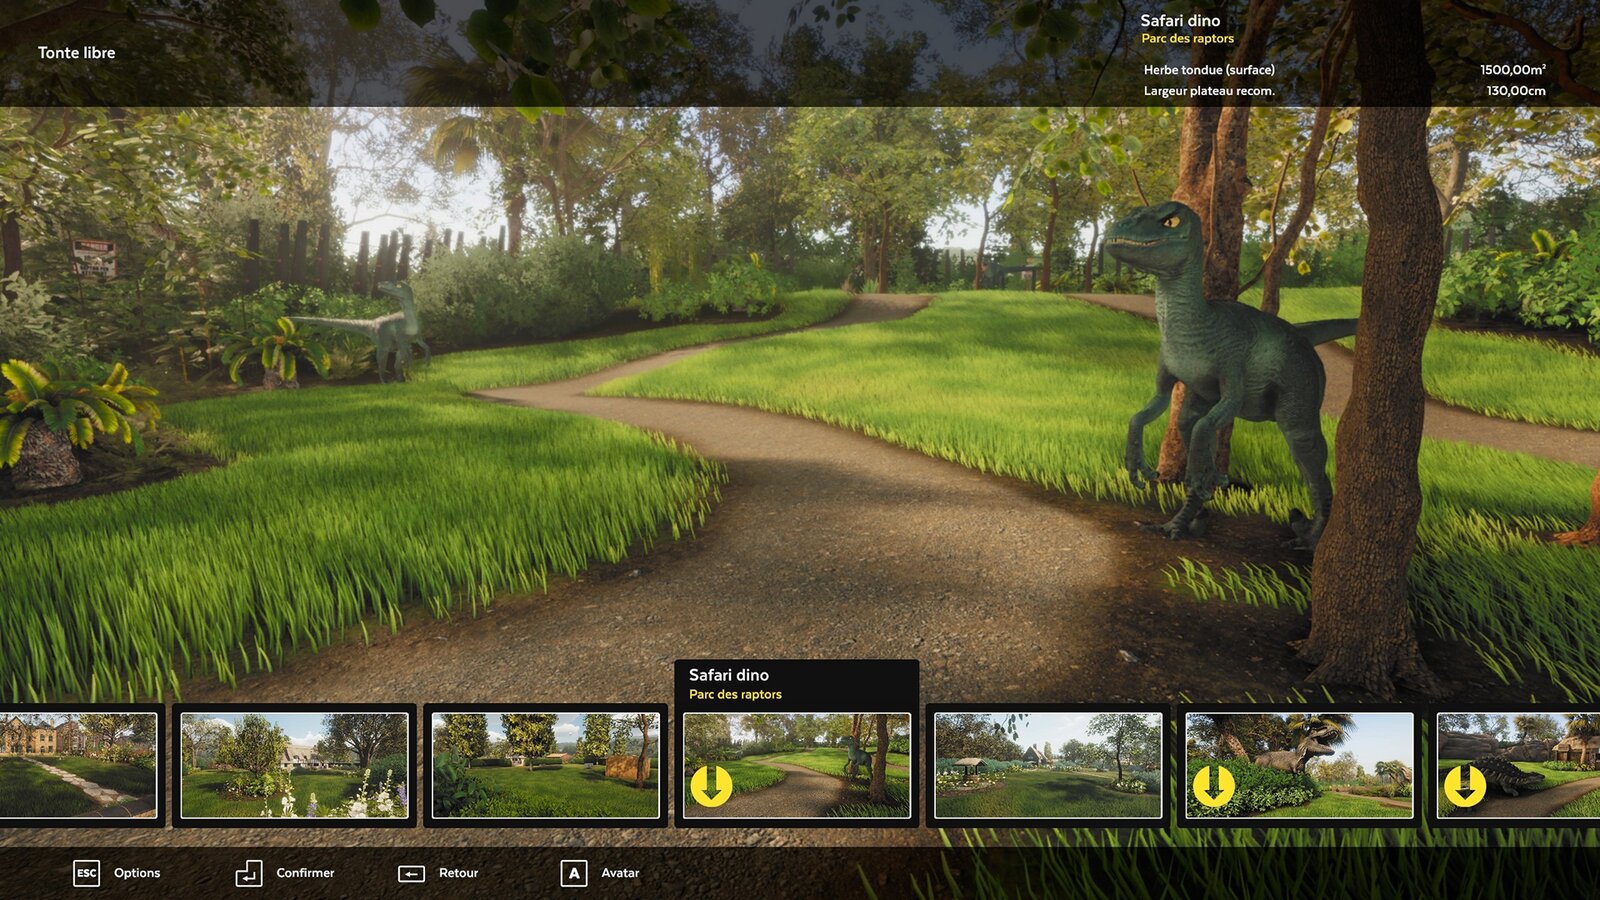 Lawn Mowing Simulator: Dino Safari